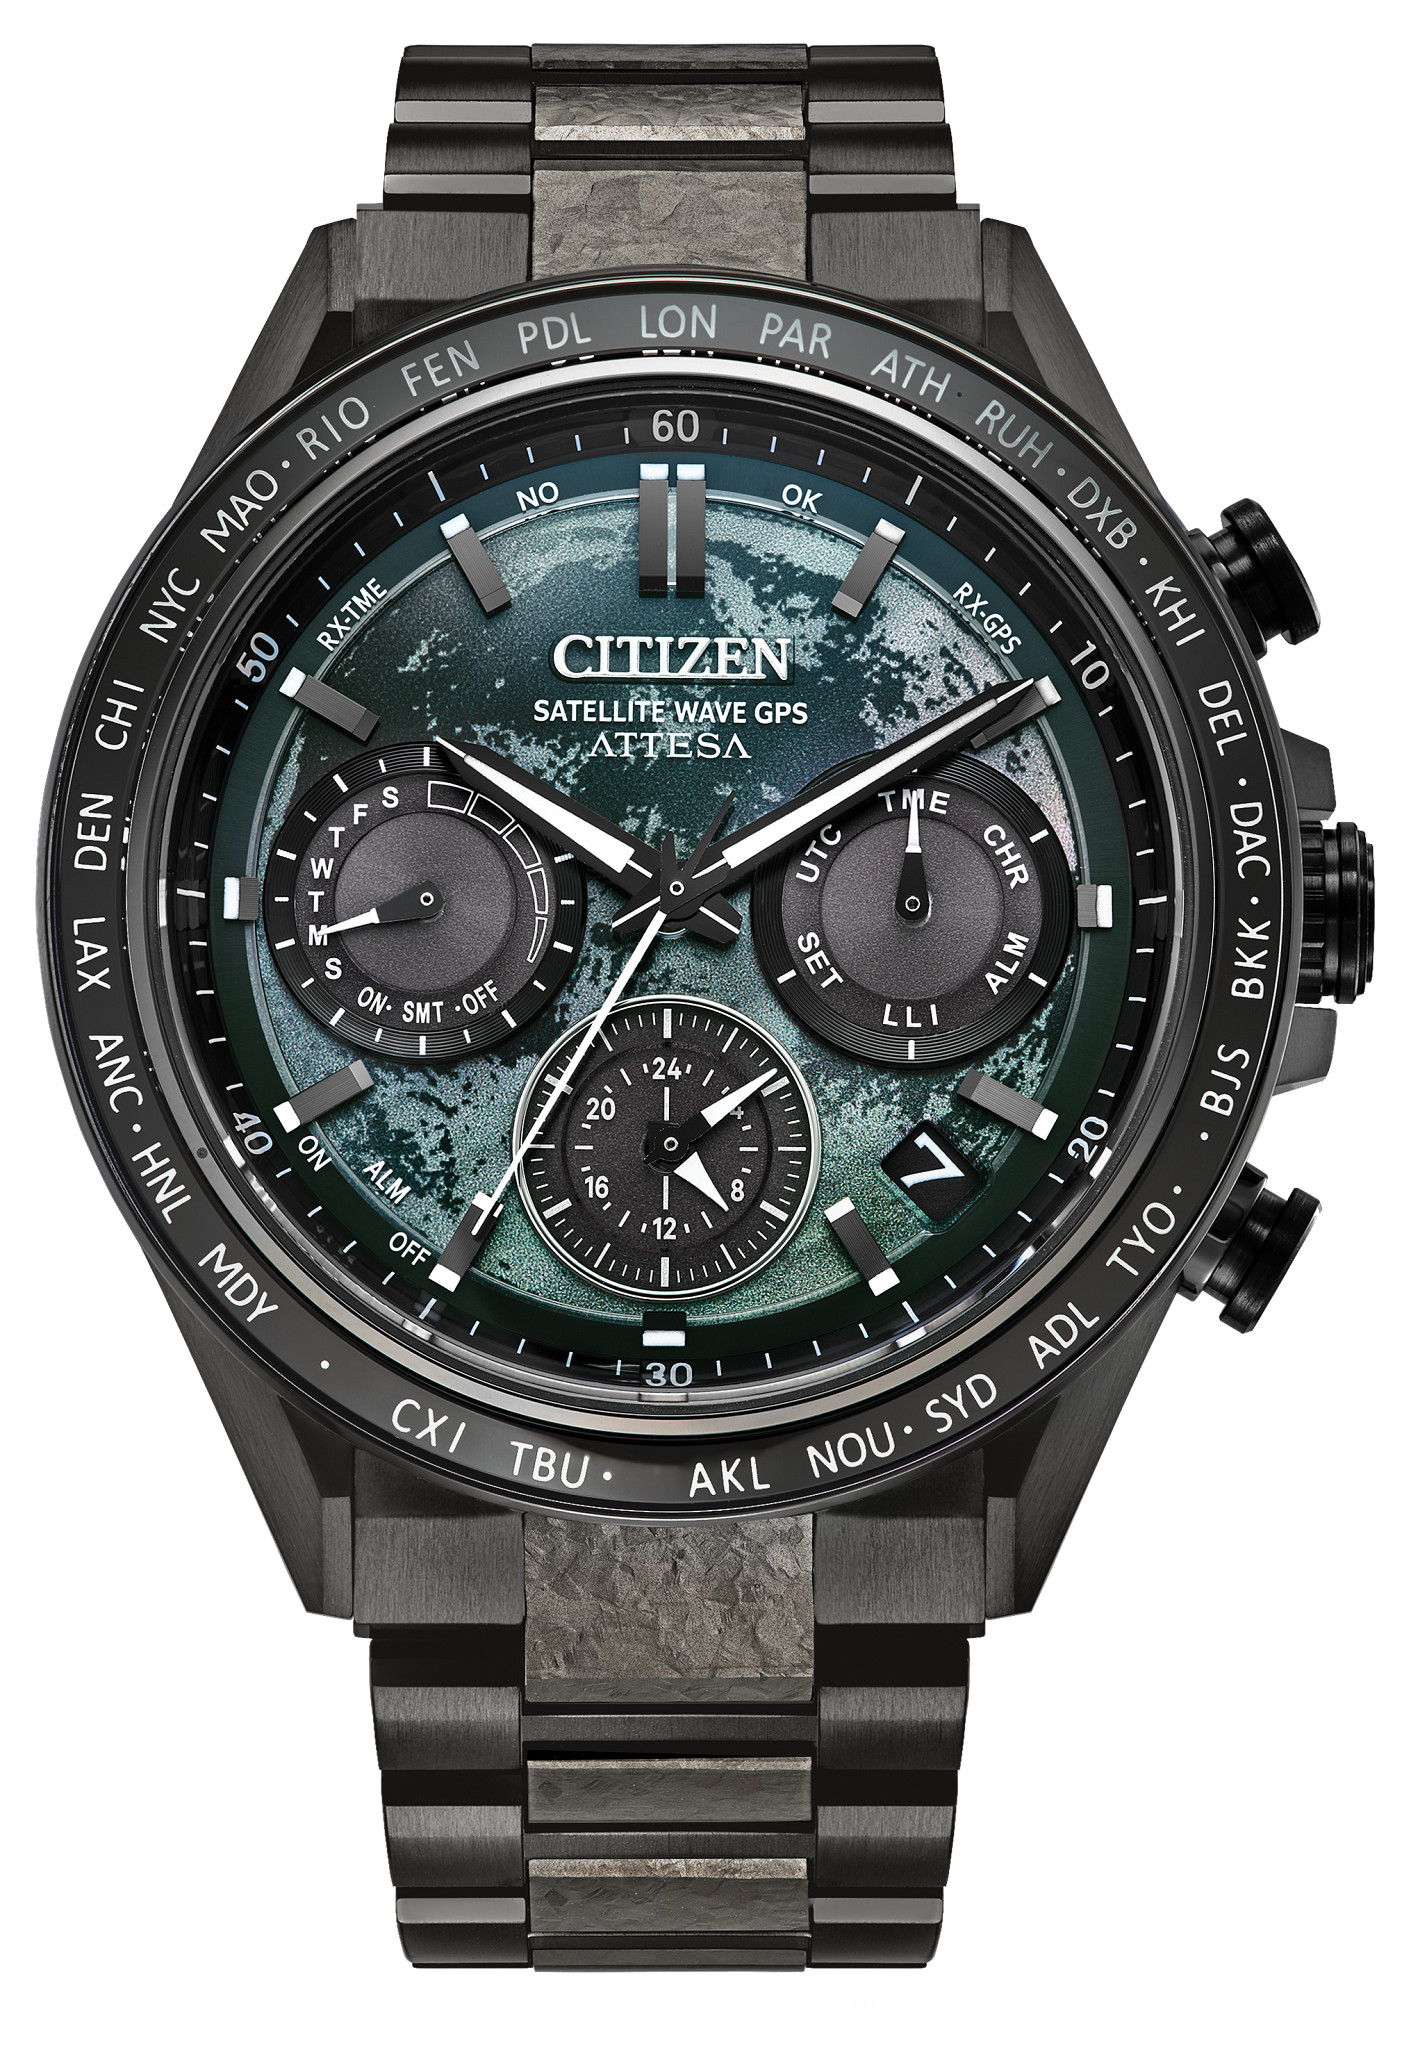 Citizen Attesa AT6050-54L Watch for Sale Online - BestWatch.com.hk